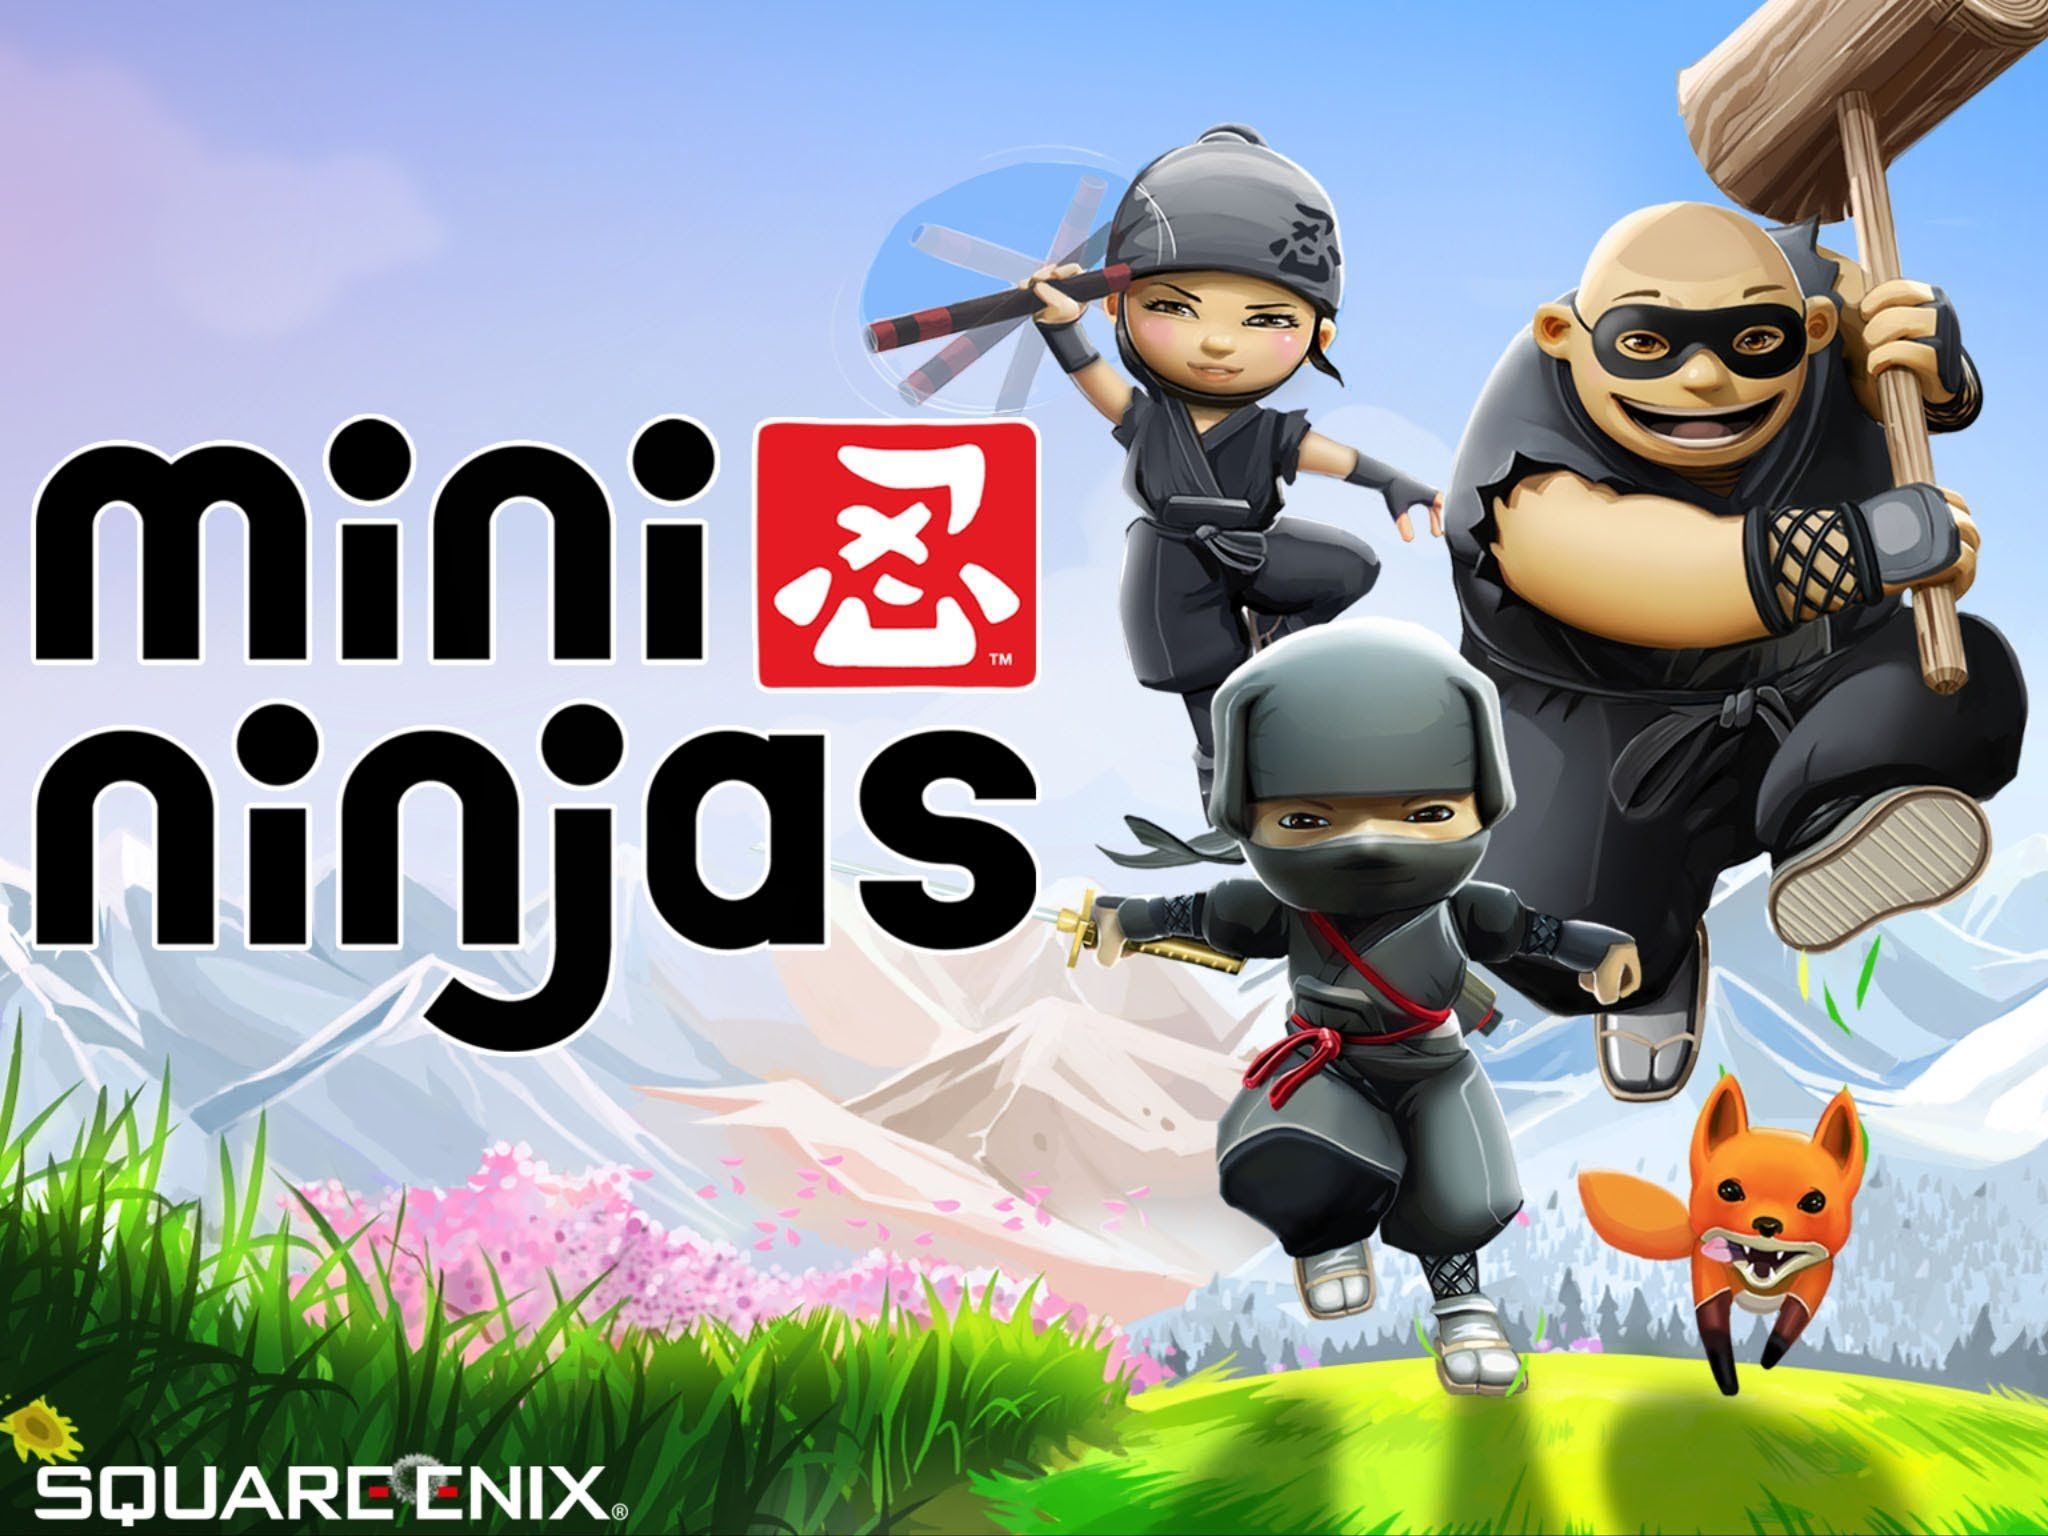 MINI NINJAS action stealth exploration adventure family ninja